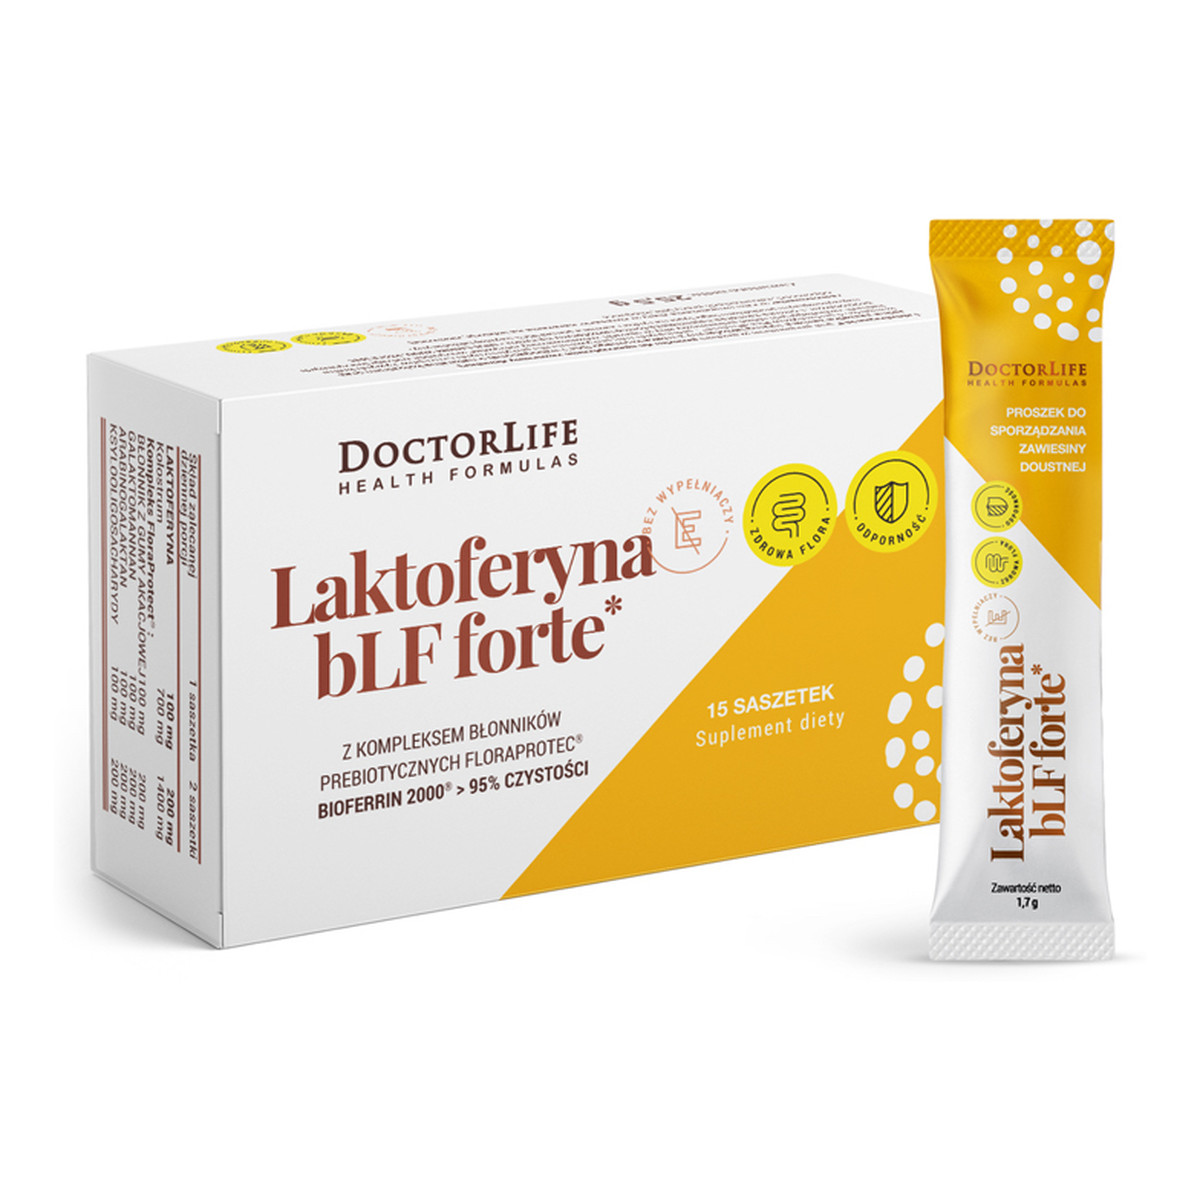 Doctor Life Laktoferyna blf forte 100mg suplement diety 15 saszetek